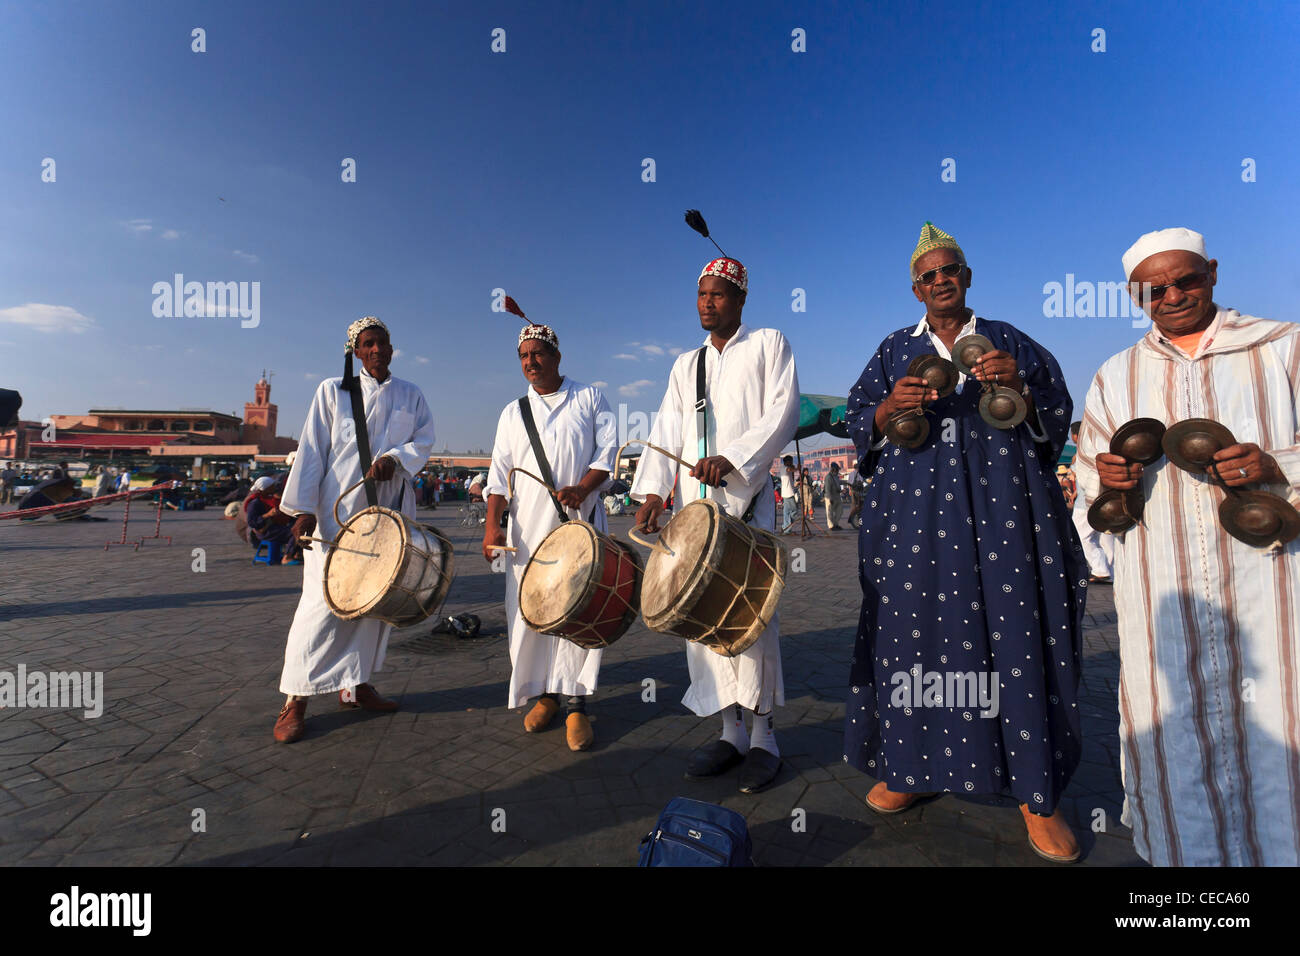 Morocco, Marrakech, Djemaa el-Fna Square, Street Performers Stock Photo